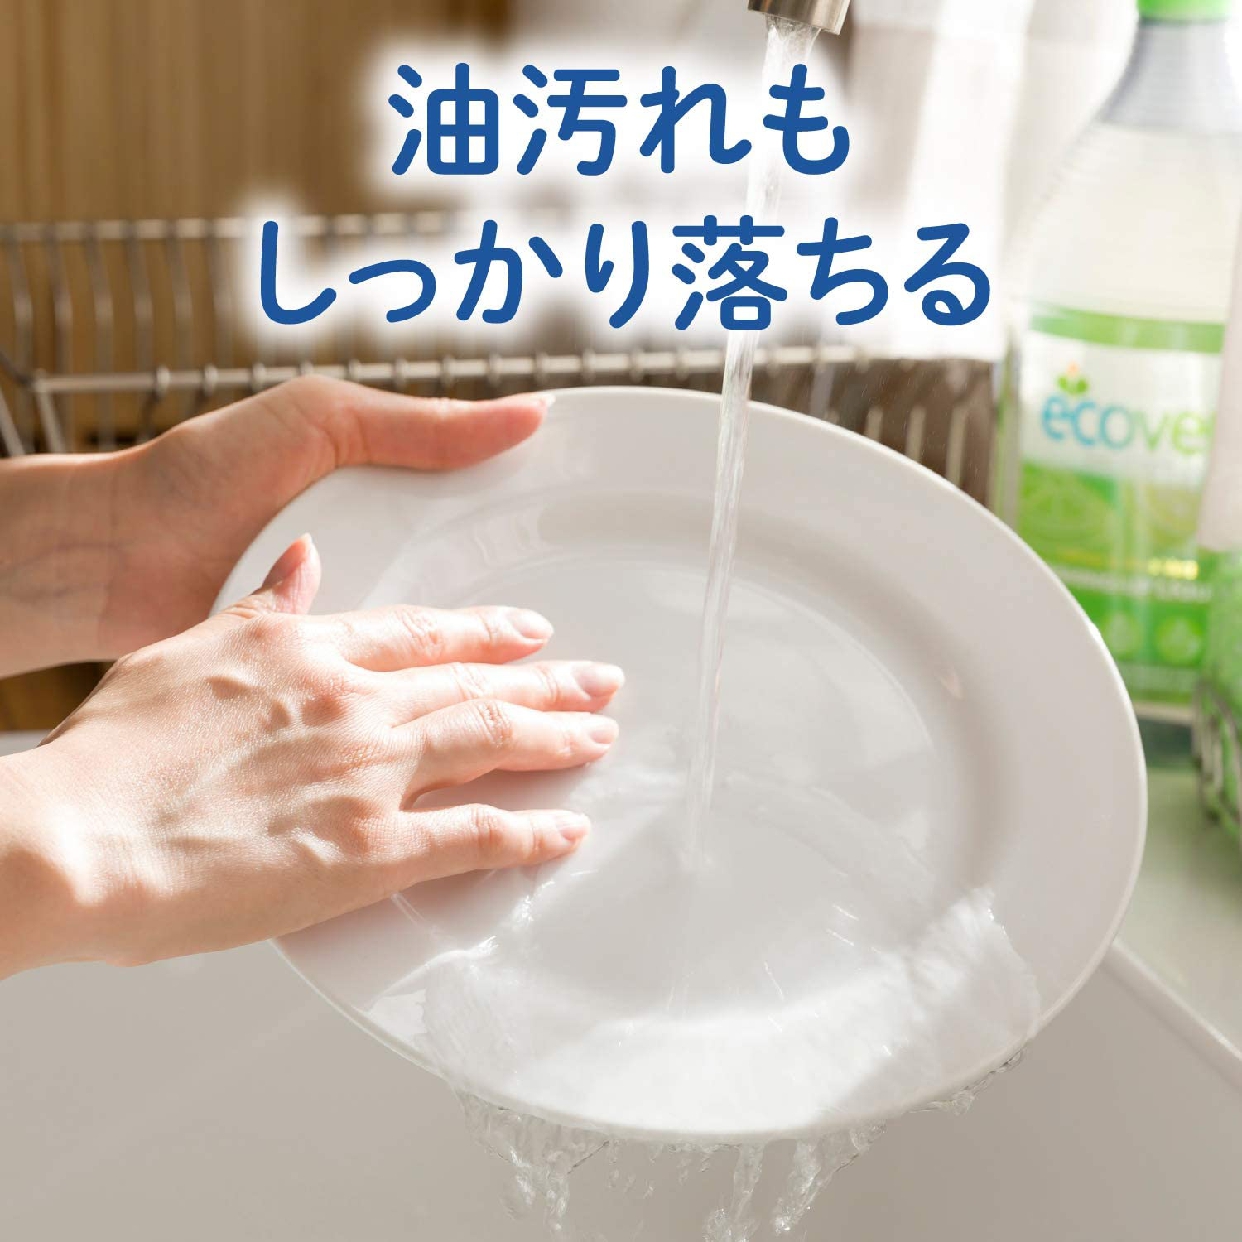 ECOVER(エコベール) 食器用洗剤 レモンの商品画像サムネ4 